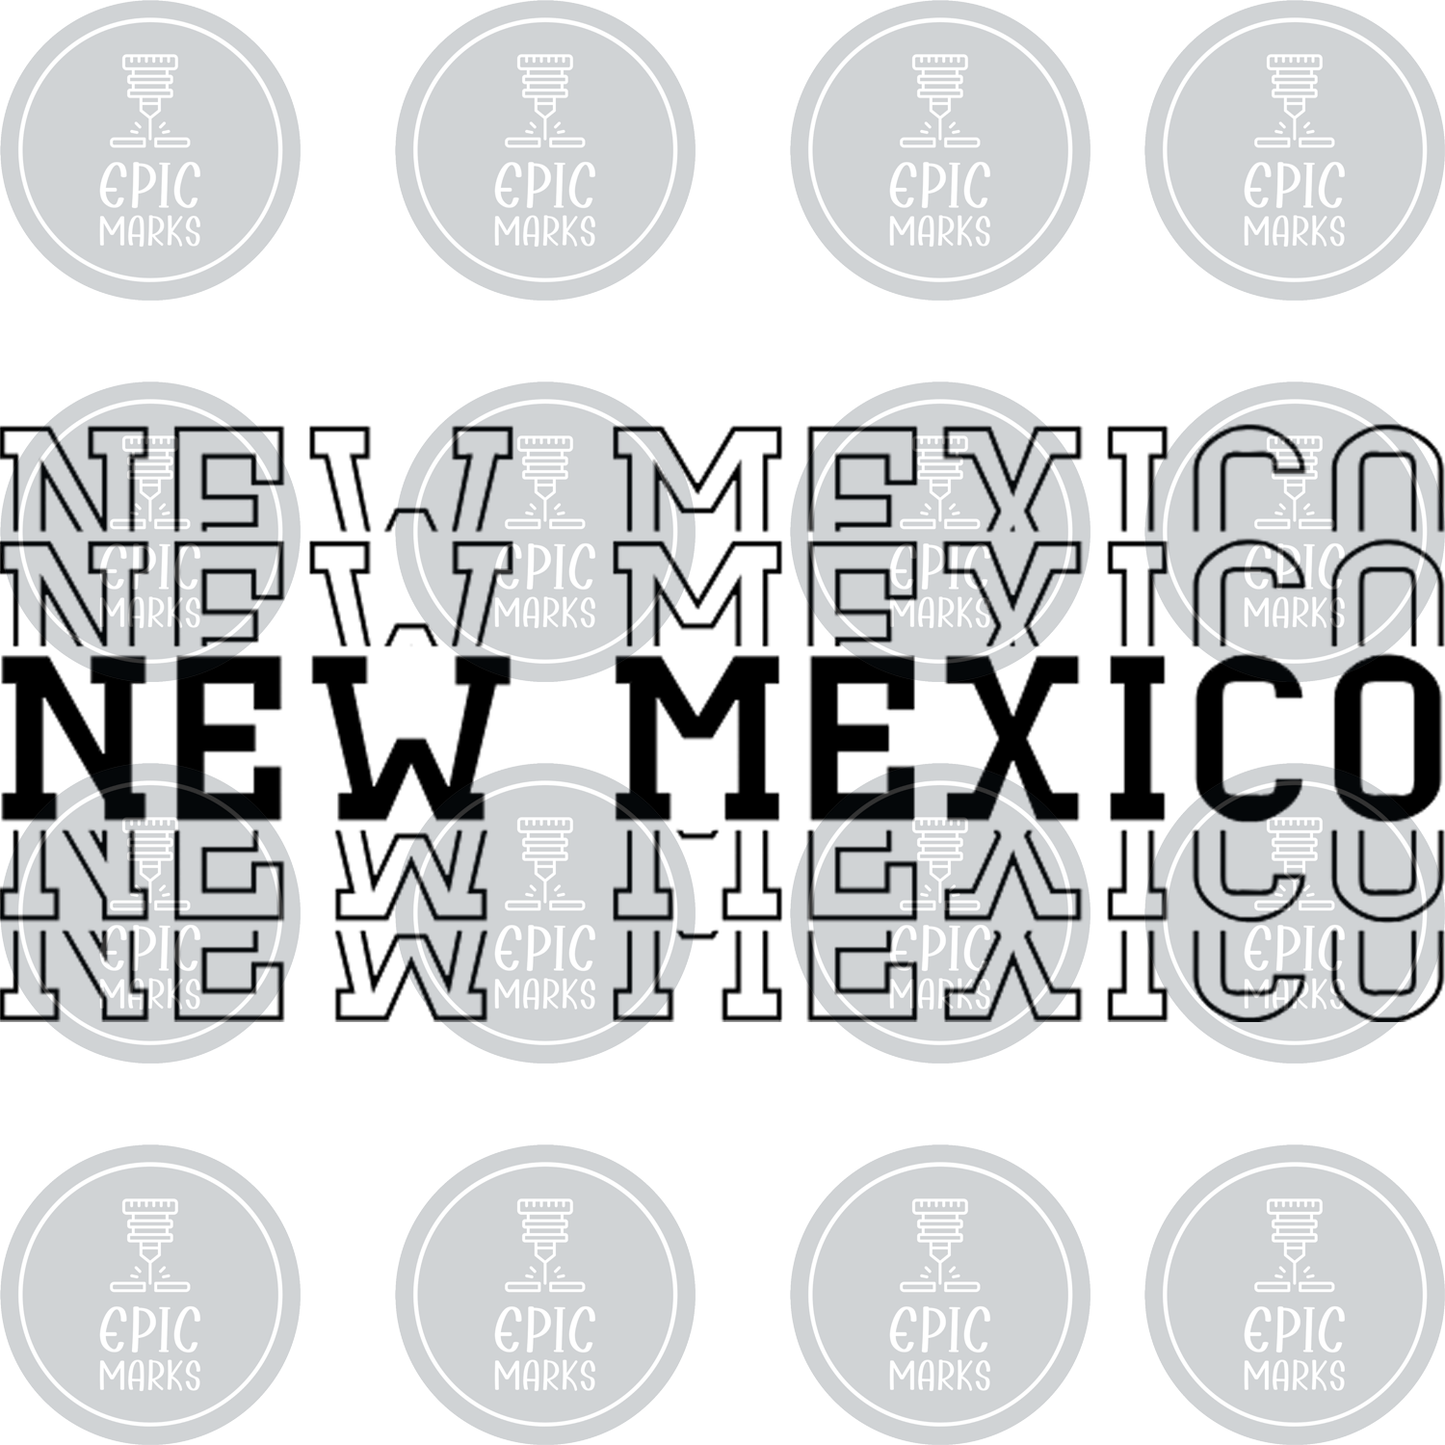 Exclusive New Mexico Designs